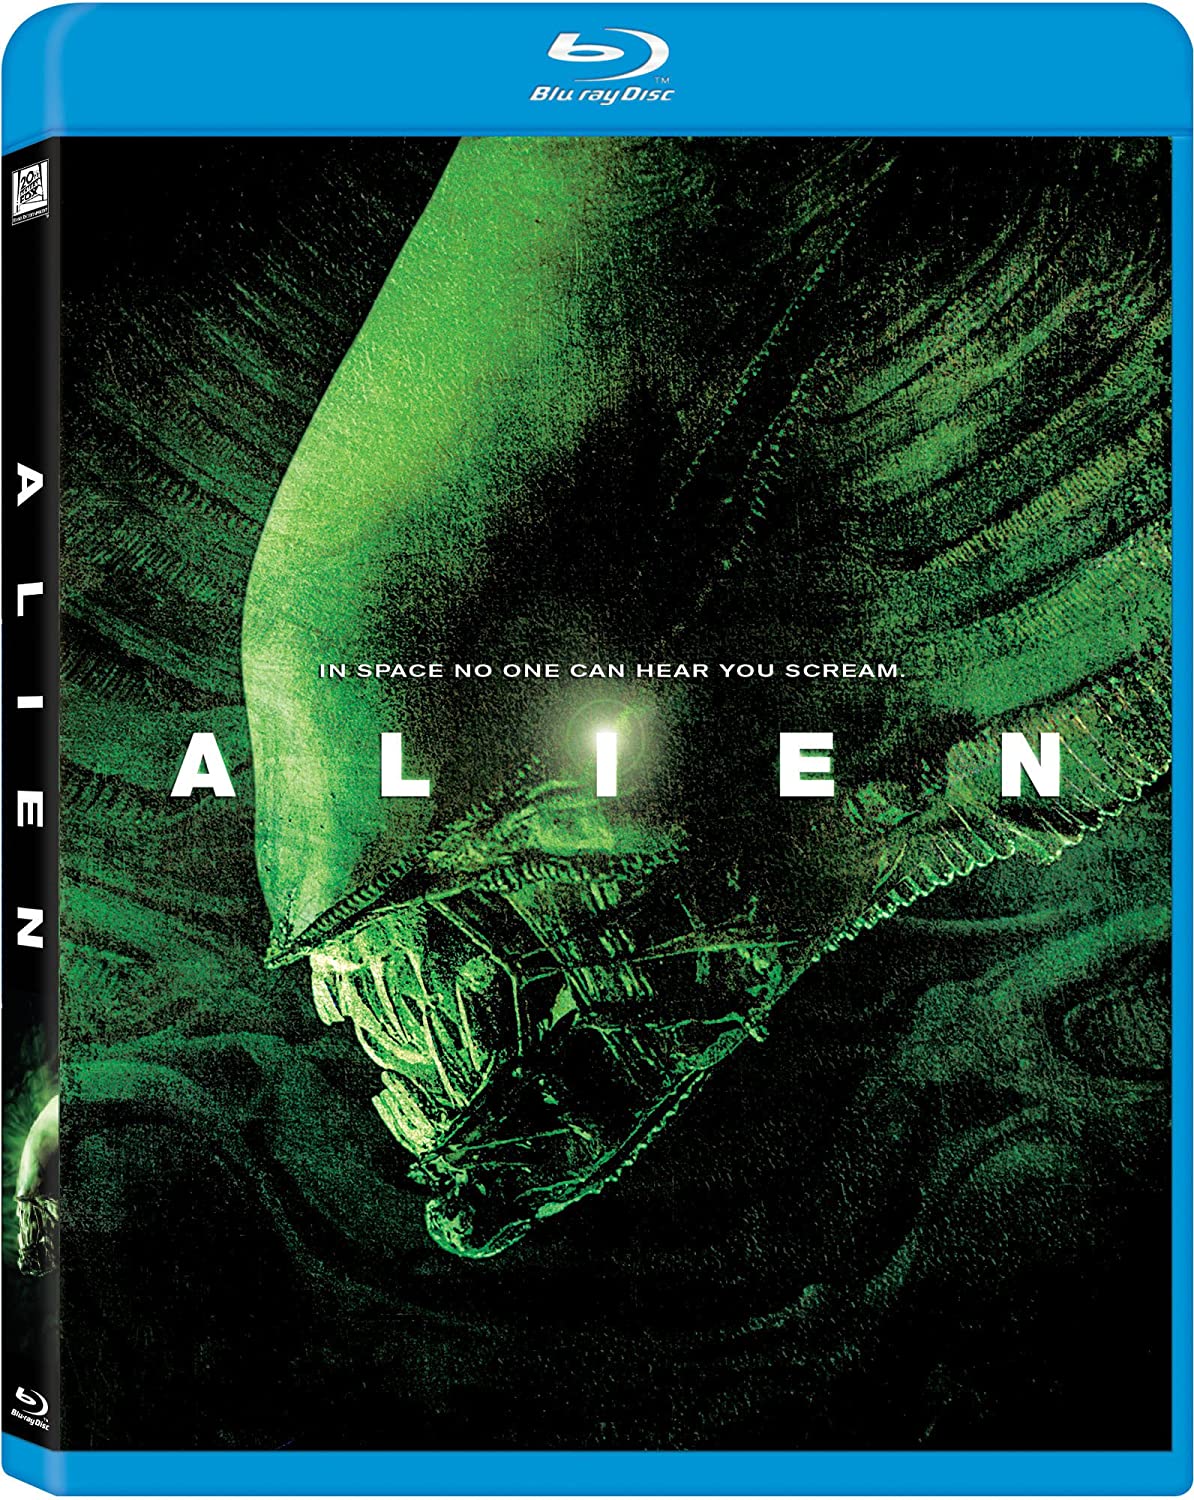 Alien movie cover